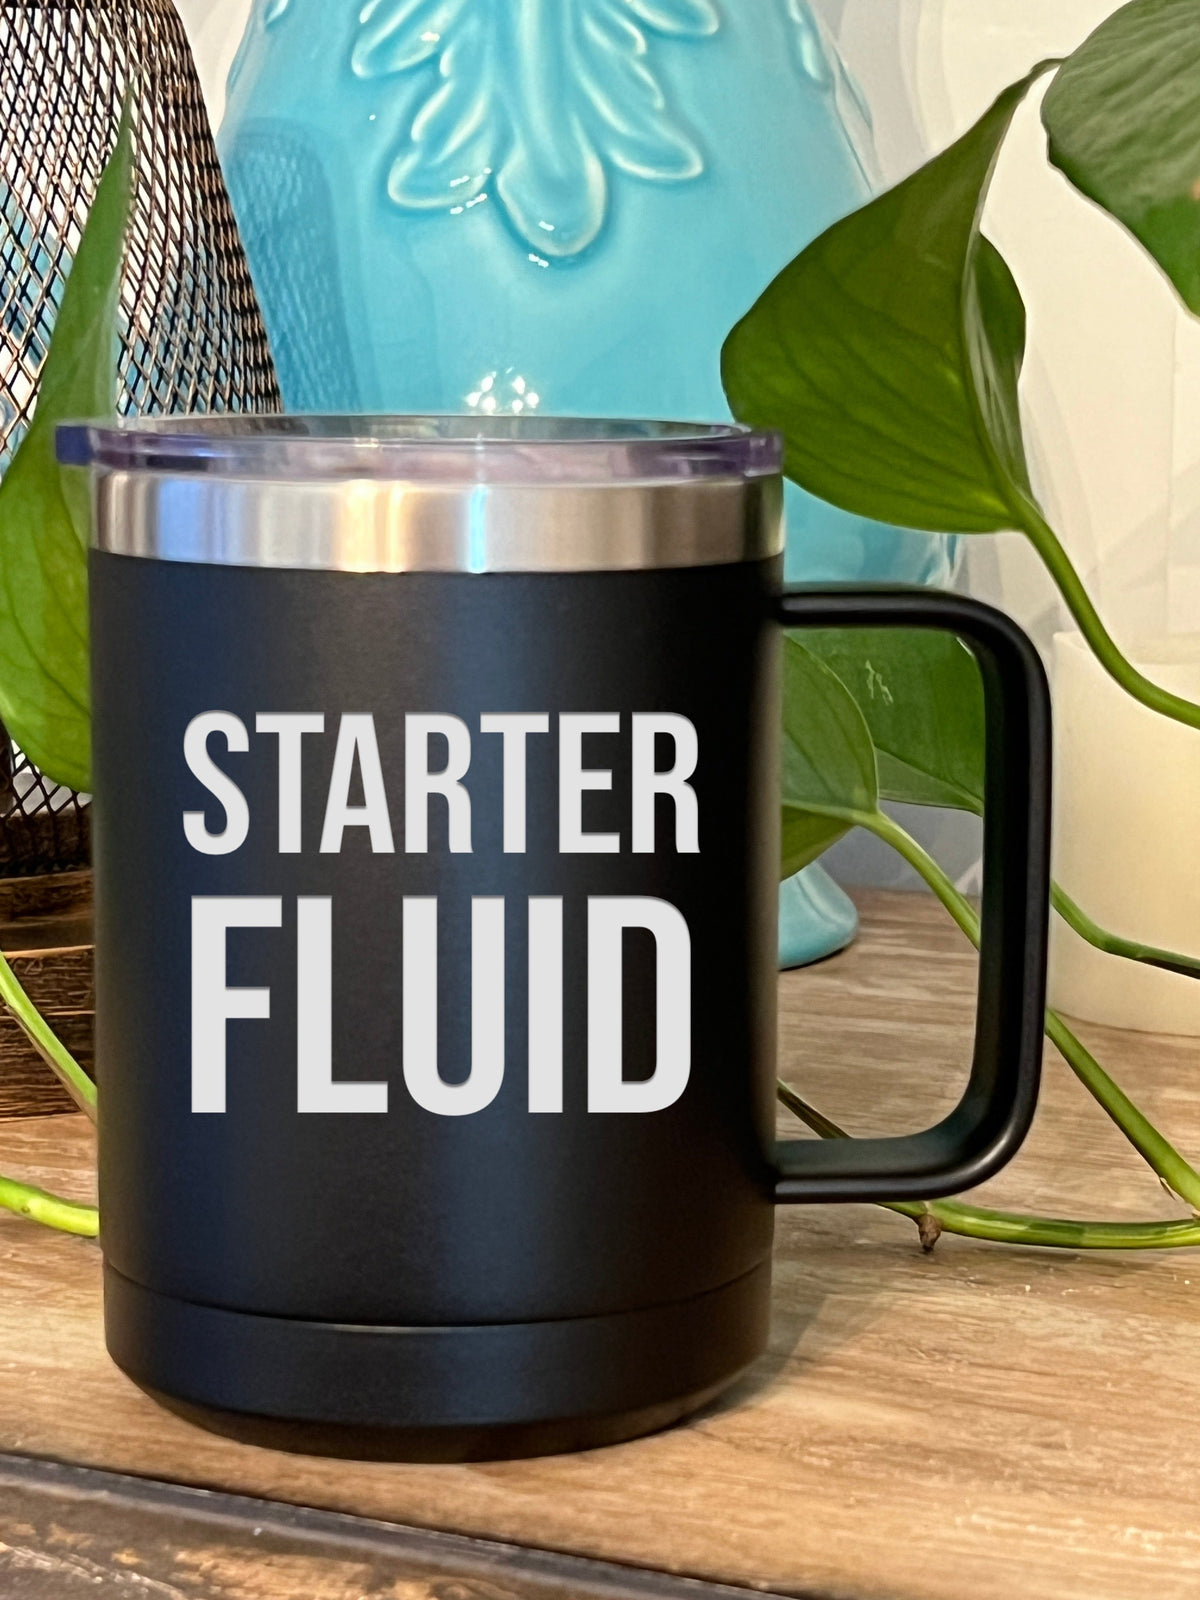 Pot Head Mug  Funny Novelty Coffee Cups — Griffco Supply